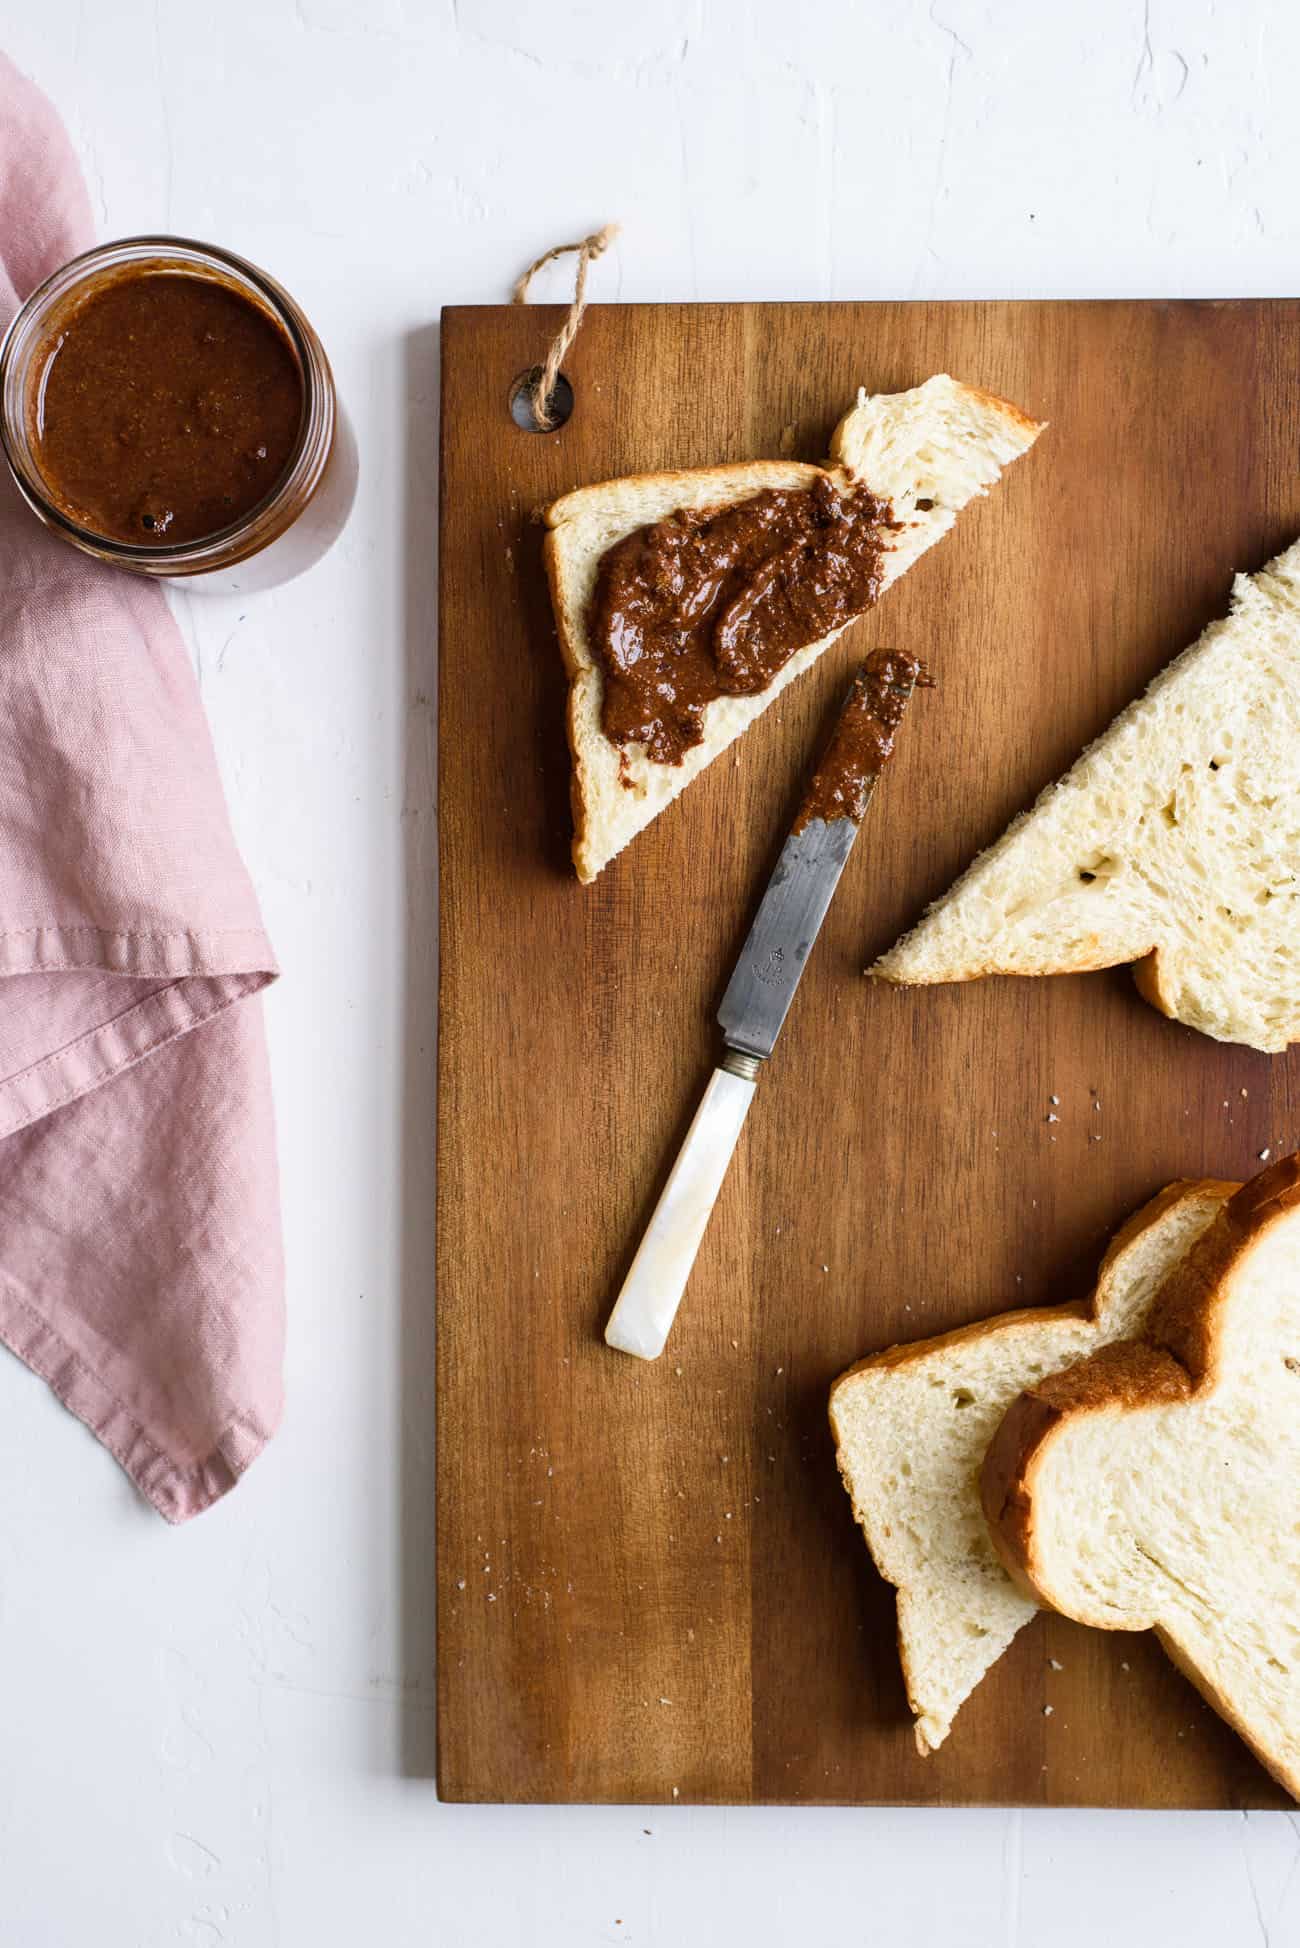 Homemade chocolate hazelnut spread (DIY Nutella) on toast on a wooden cutting board